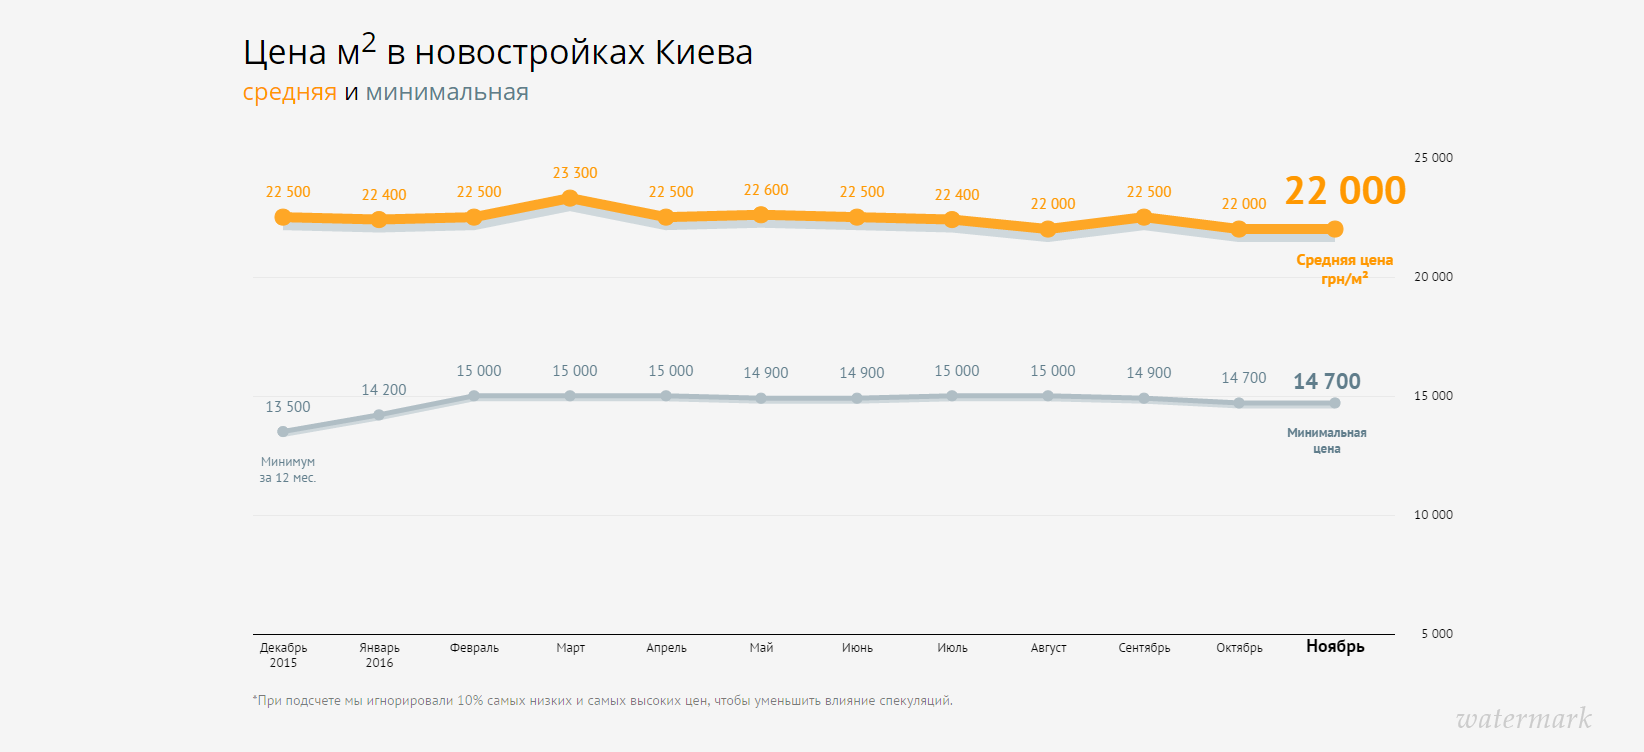 Сколько стоит квартира в Киеве — статистика за ноябрь